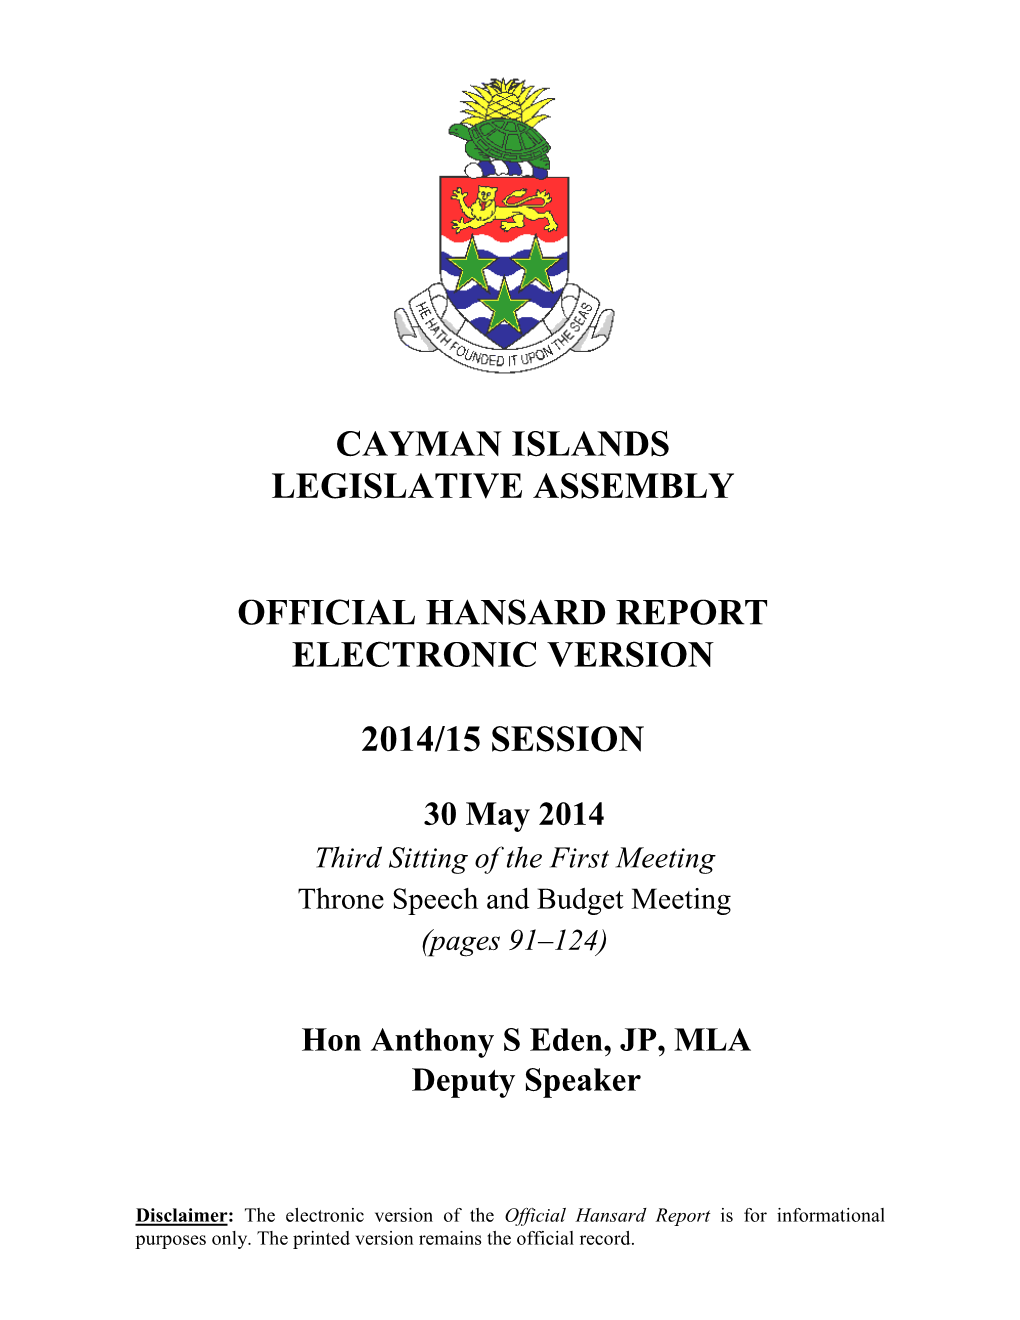 Hansard Report Electronic Version